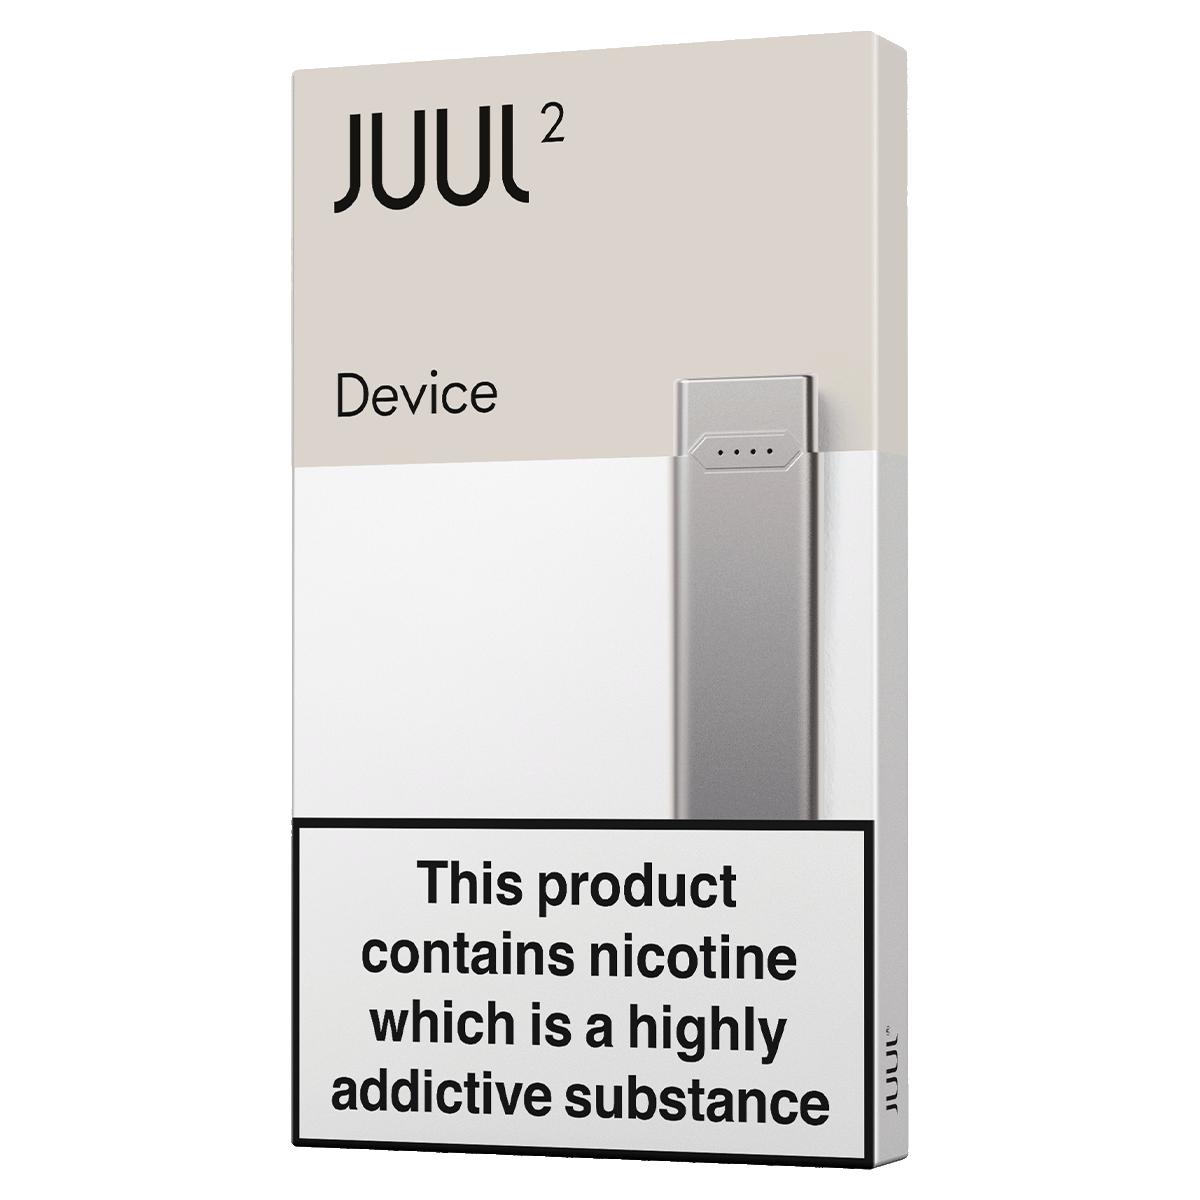 JUUL2 Device Angled